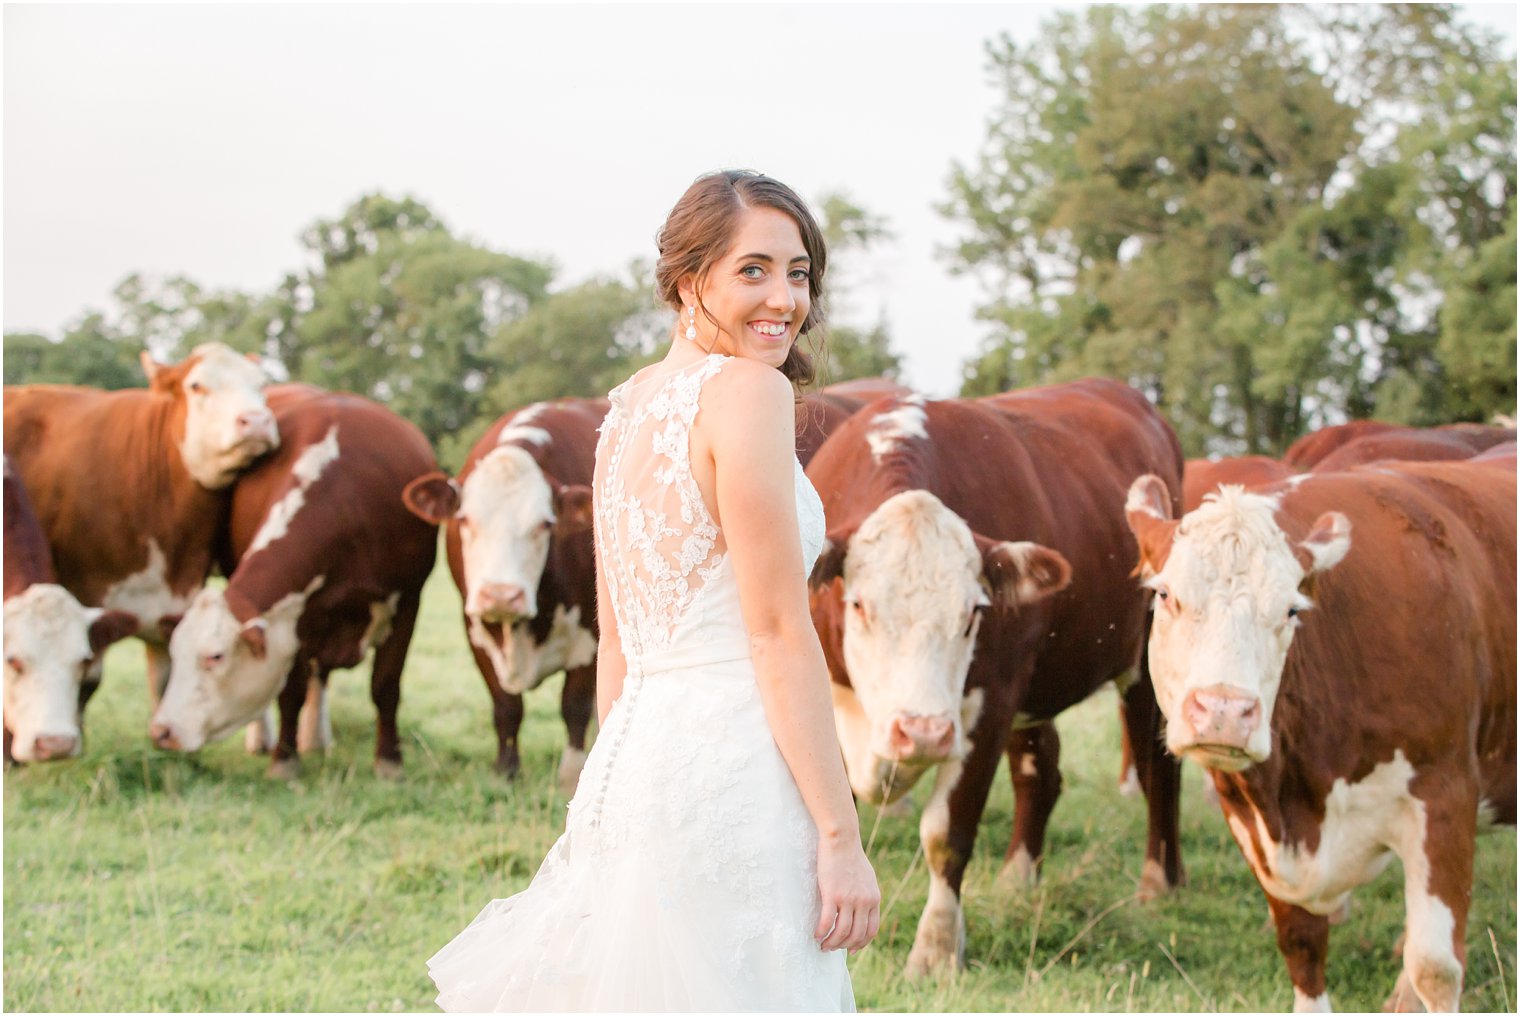 Playful photo of bride on farm